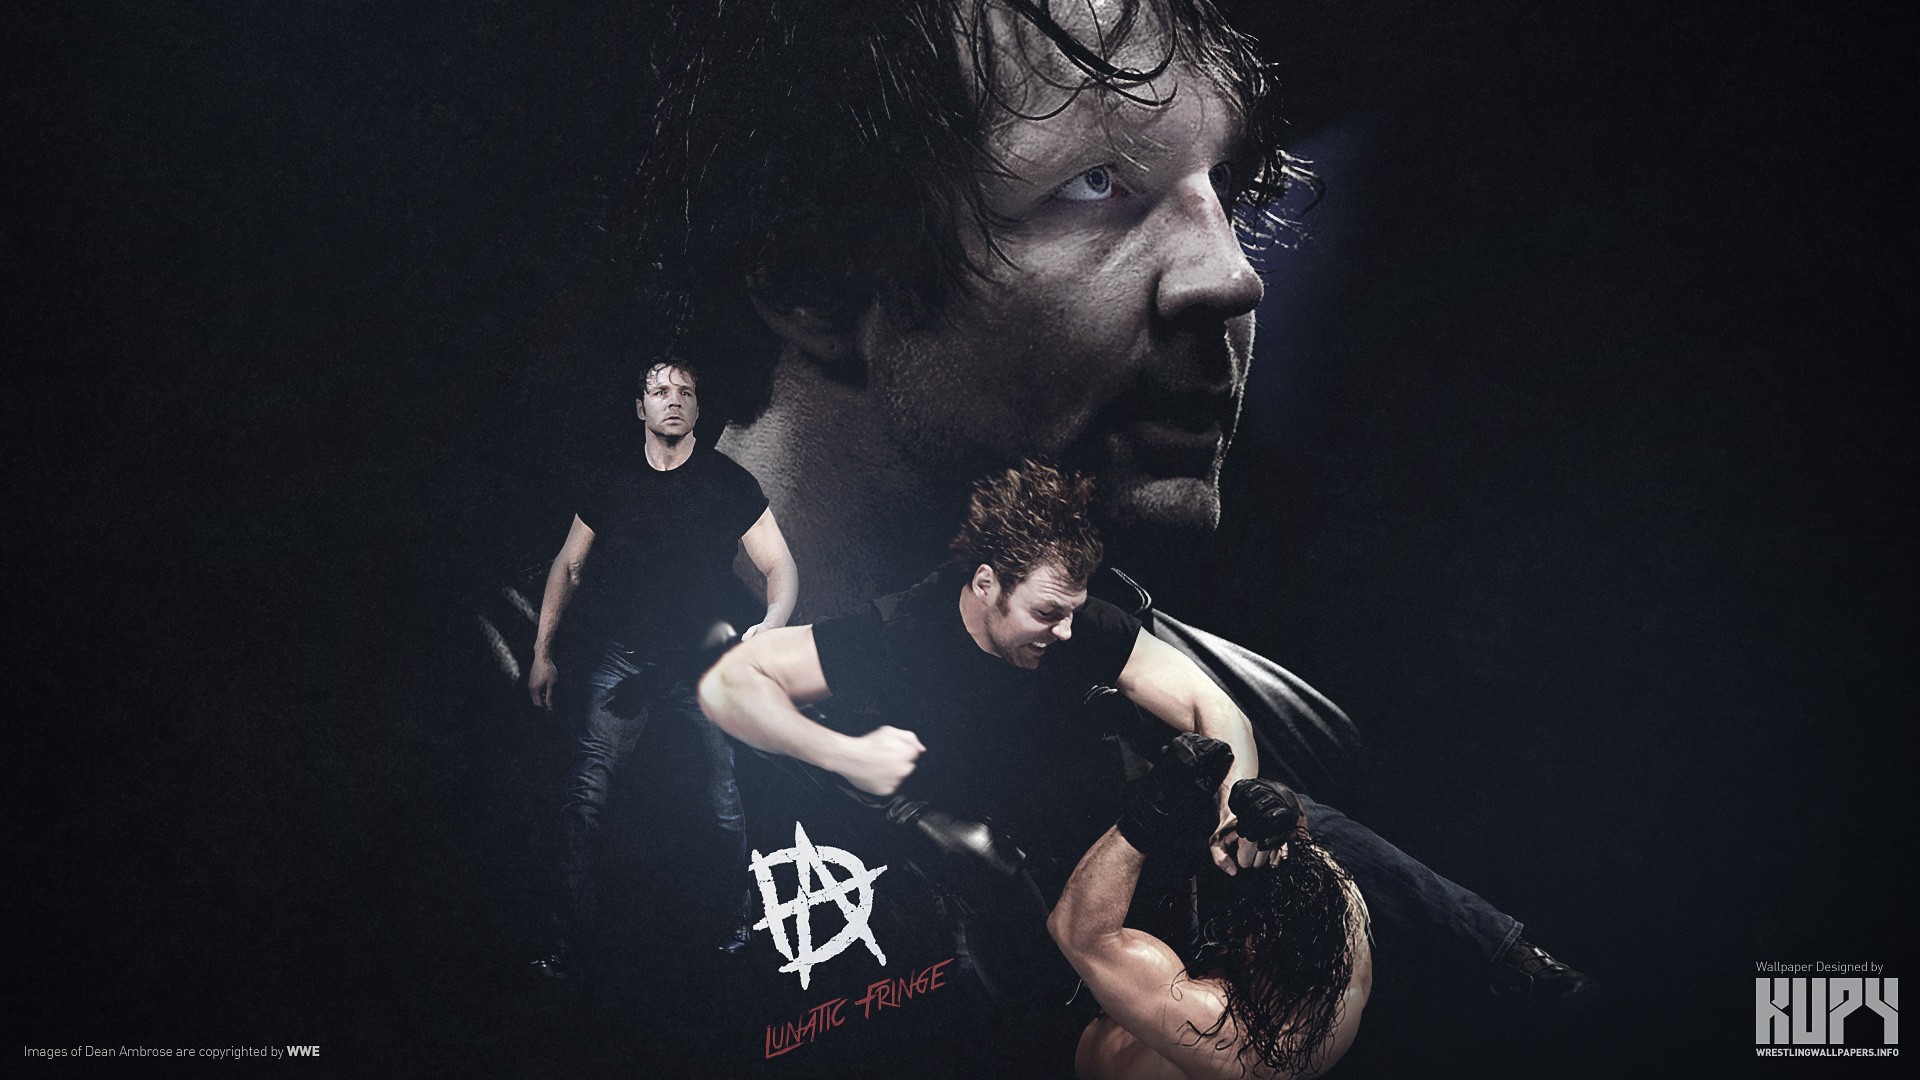 Wwe Dean Ambrose Wrestling Wallpapers Hd Desktop And Mobile Backgrounds